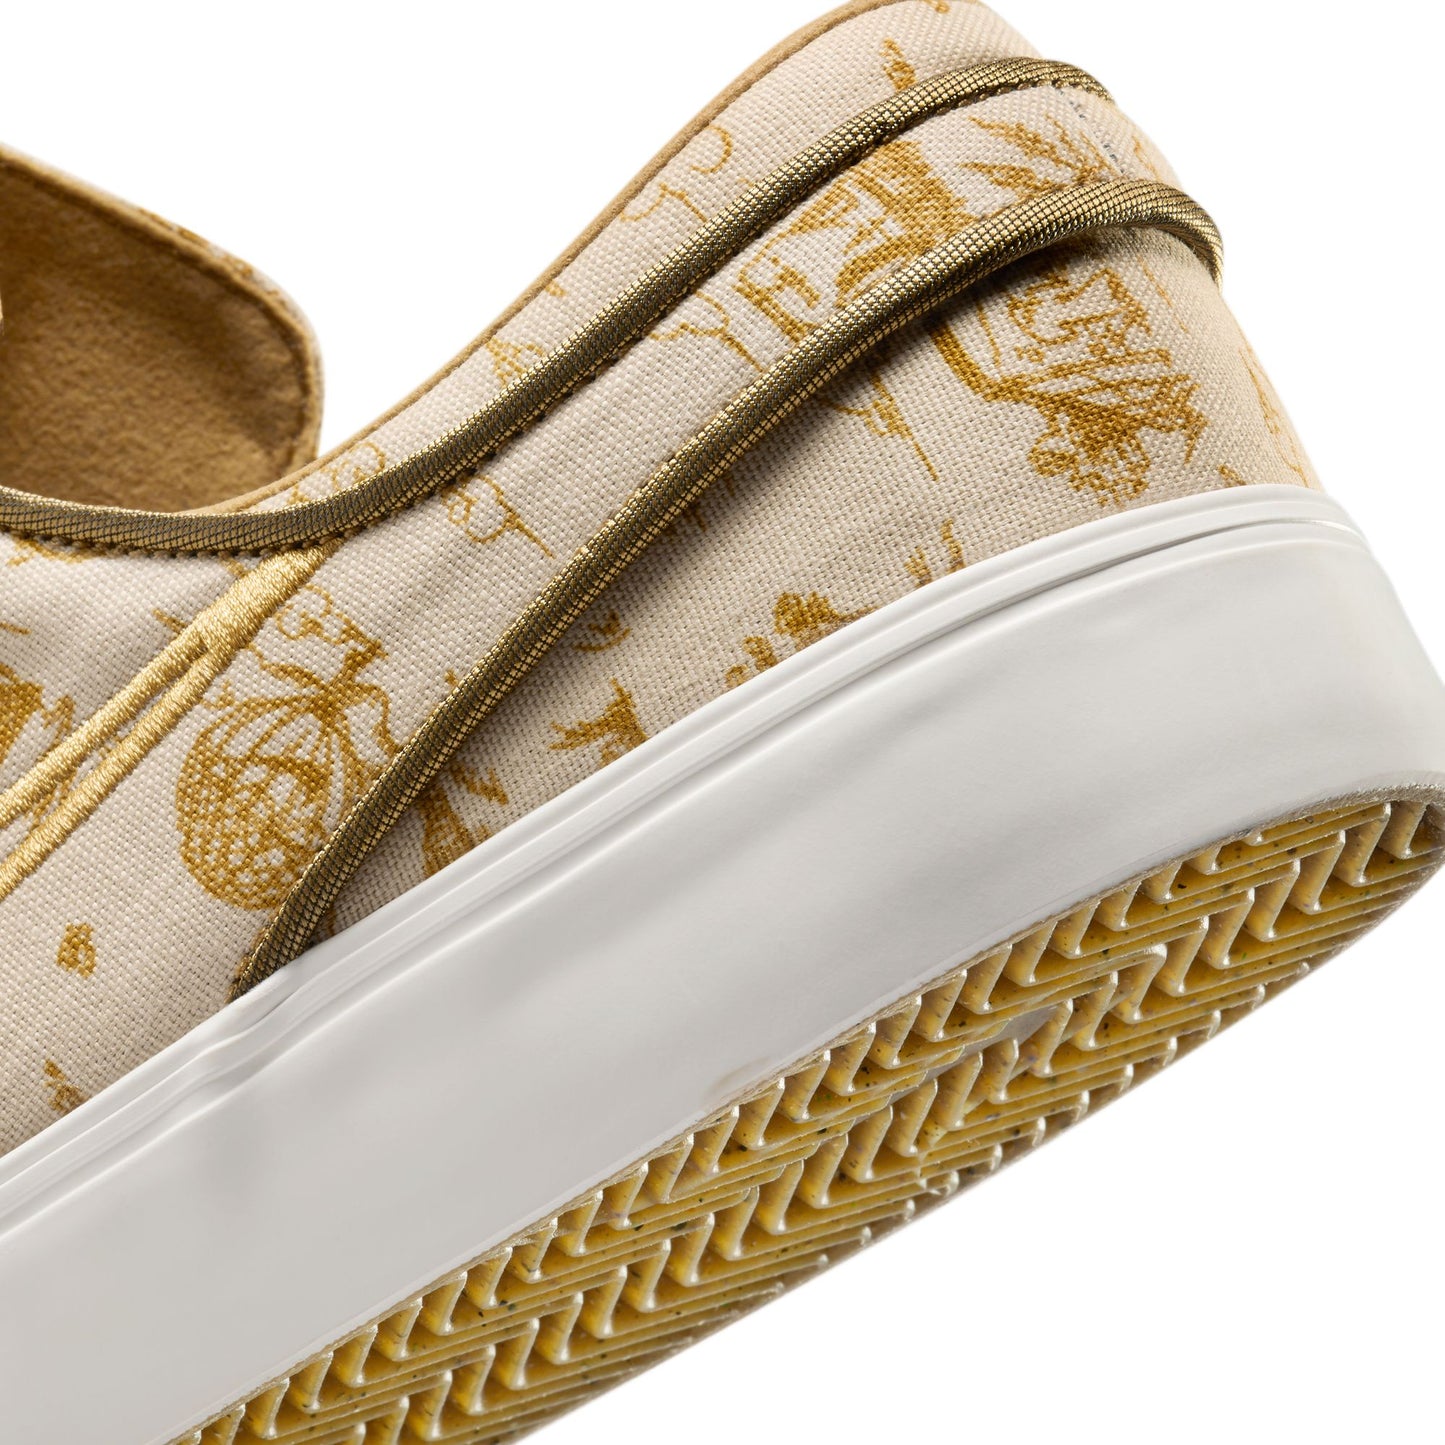 Nike SB Janoski OG+ Premium sesame gold bronzine sail